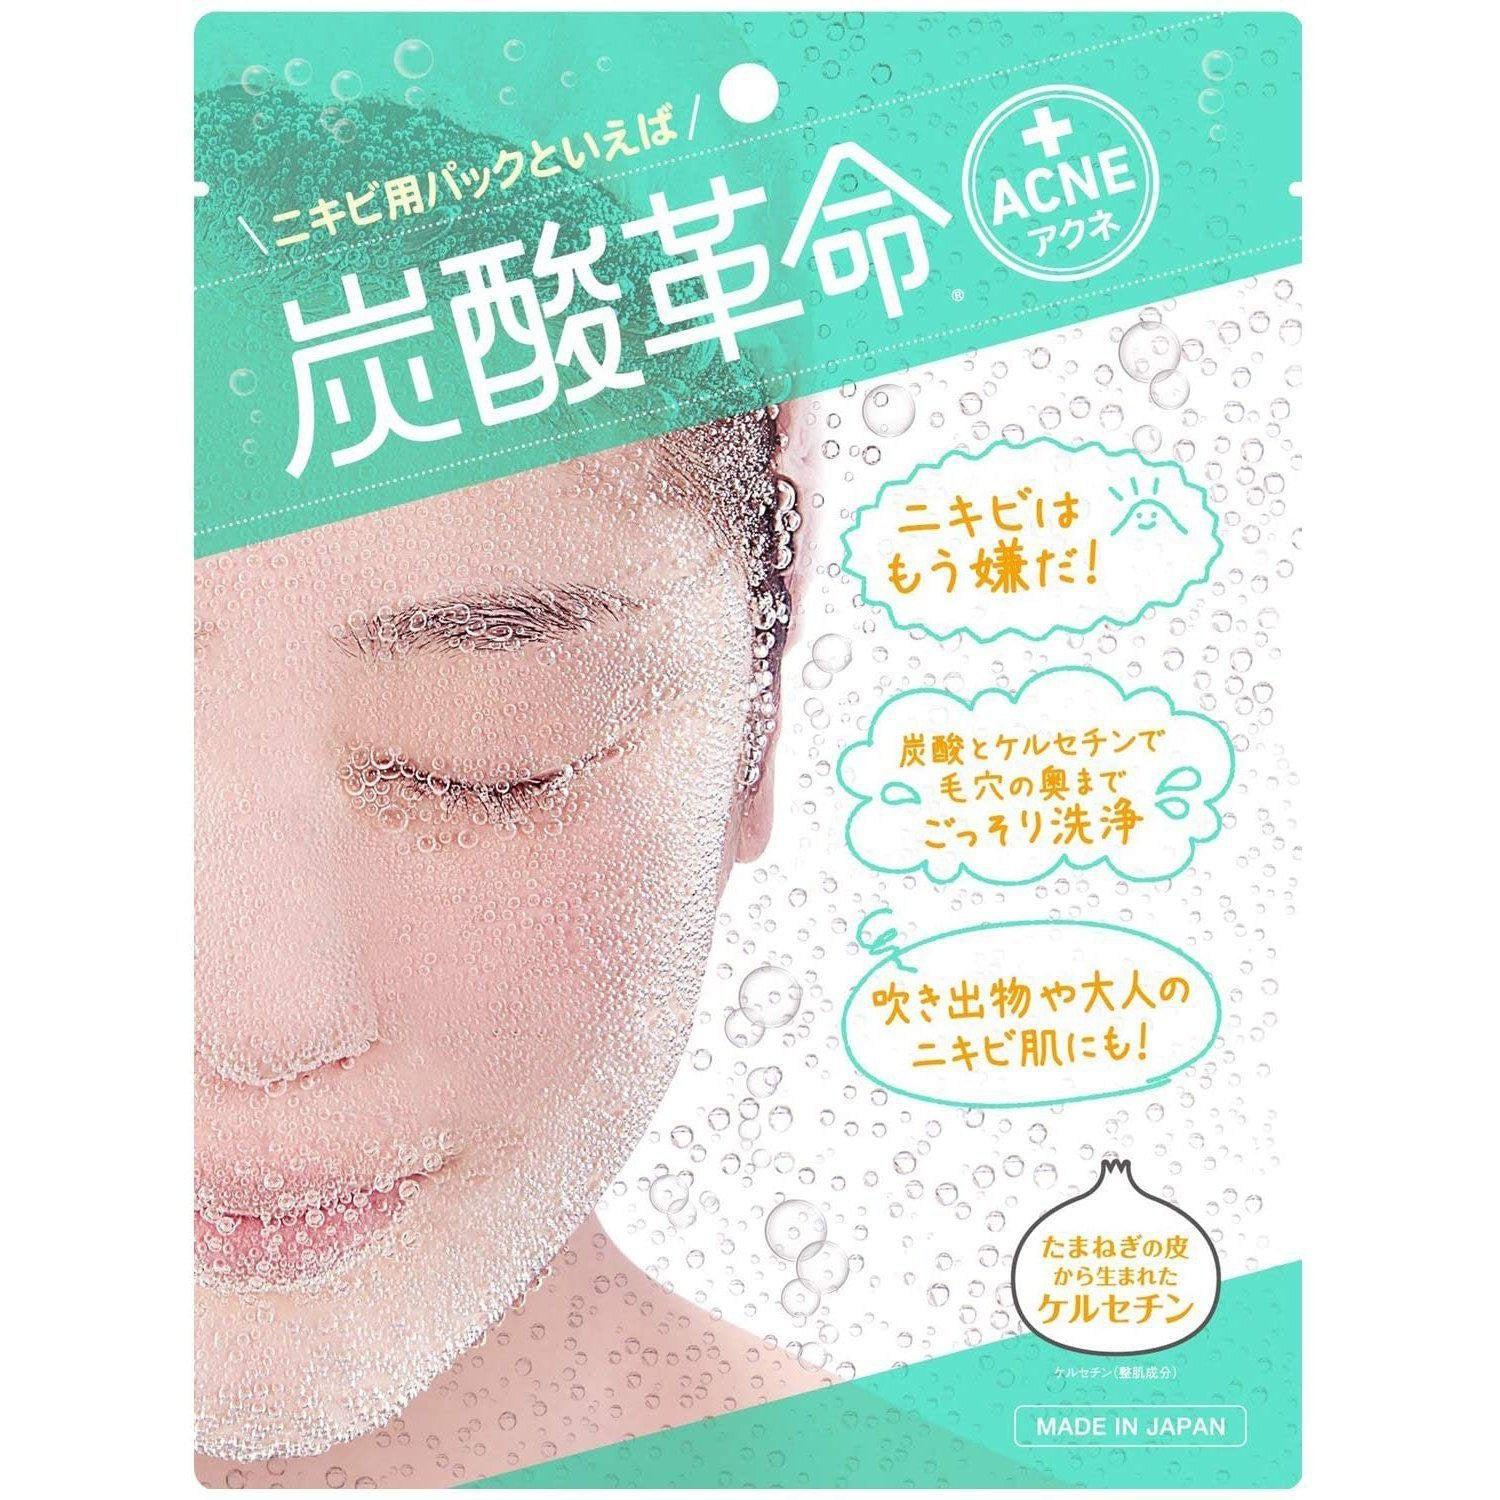 P-1-SYN-TAN-AC-1-Tansan Kakumei Acne Carbonic Acid Face Treatment 1 Set.jpg